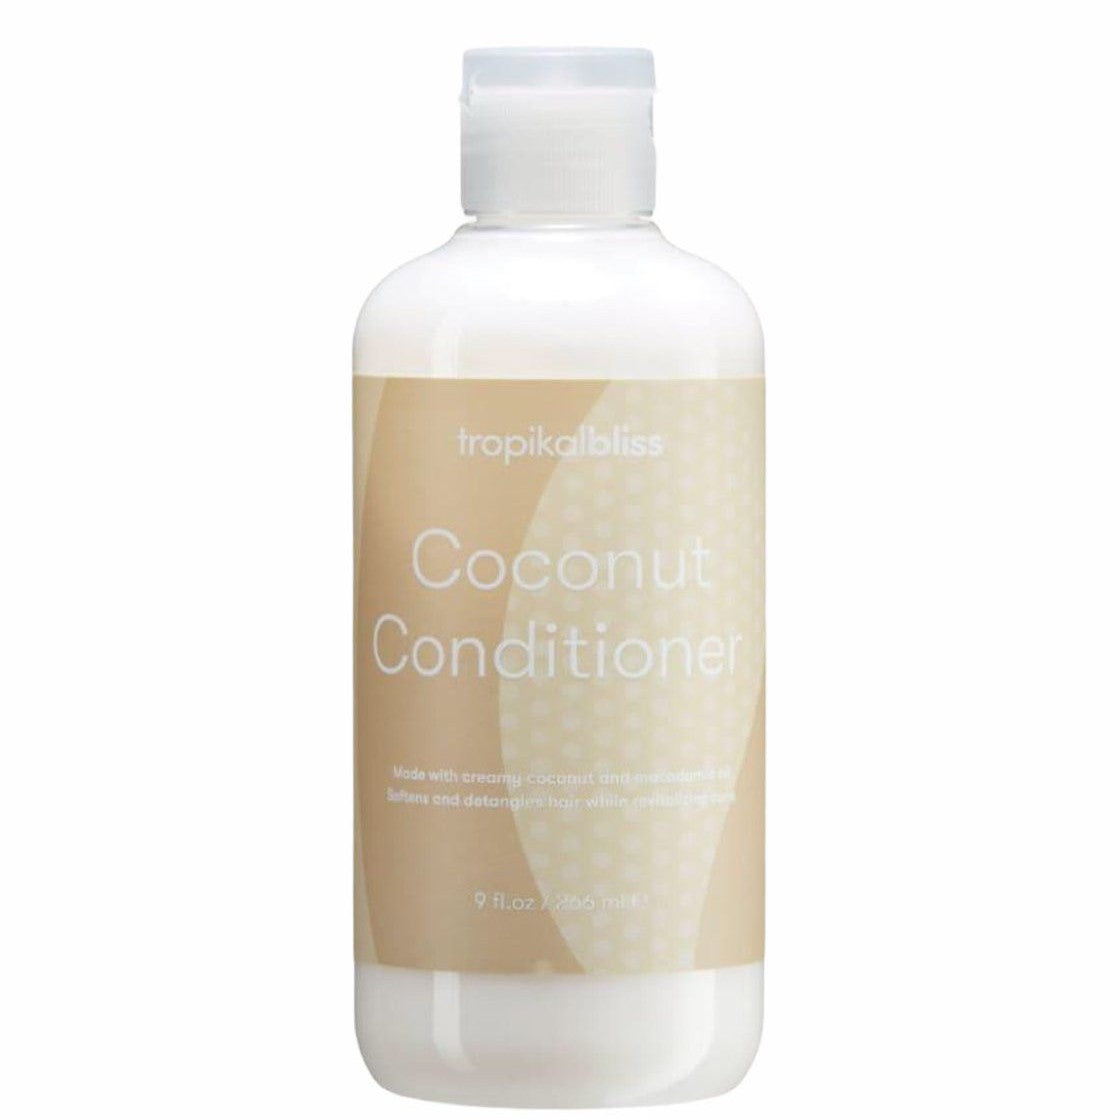 Tropicalbliss Coconut Conditioner 9oz / 266 ml